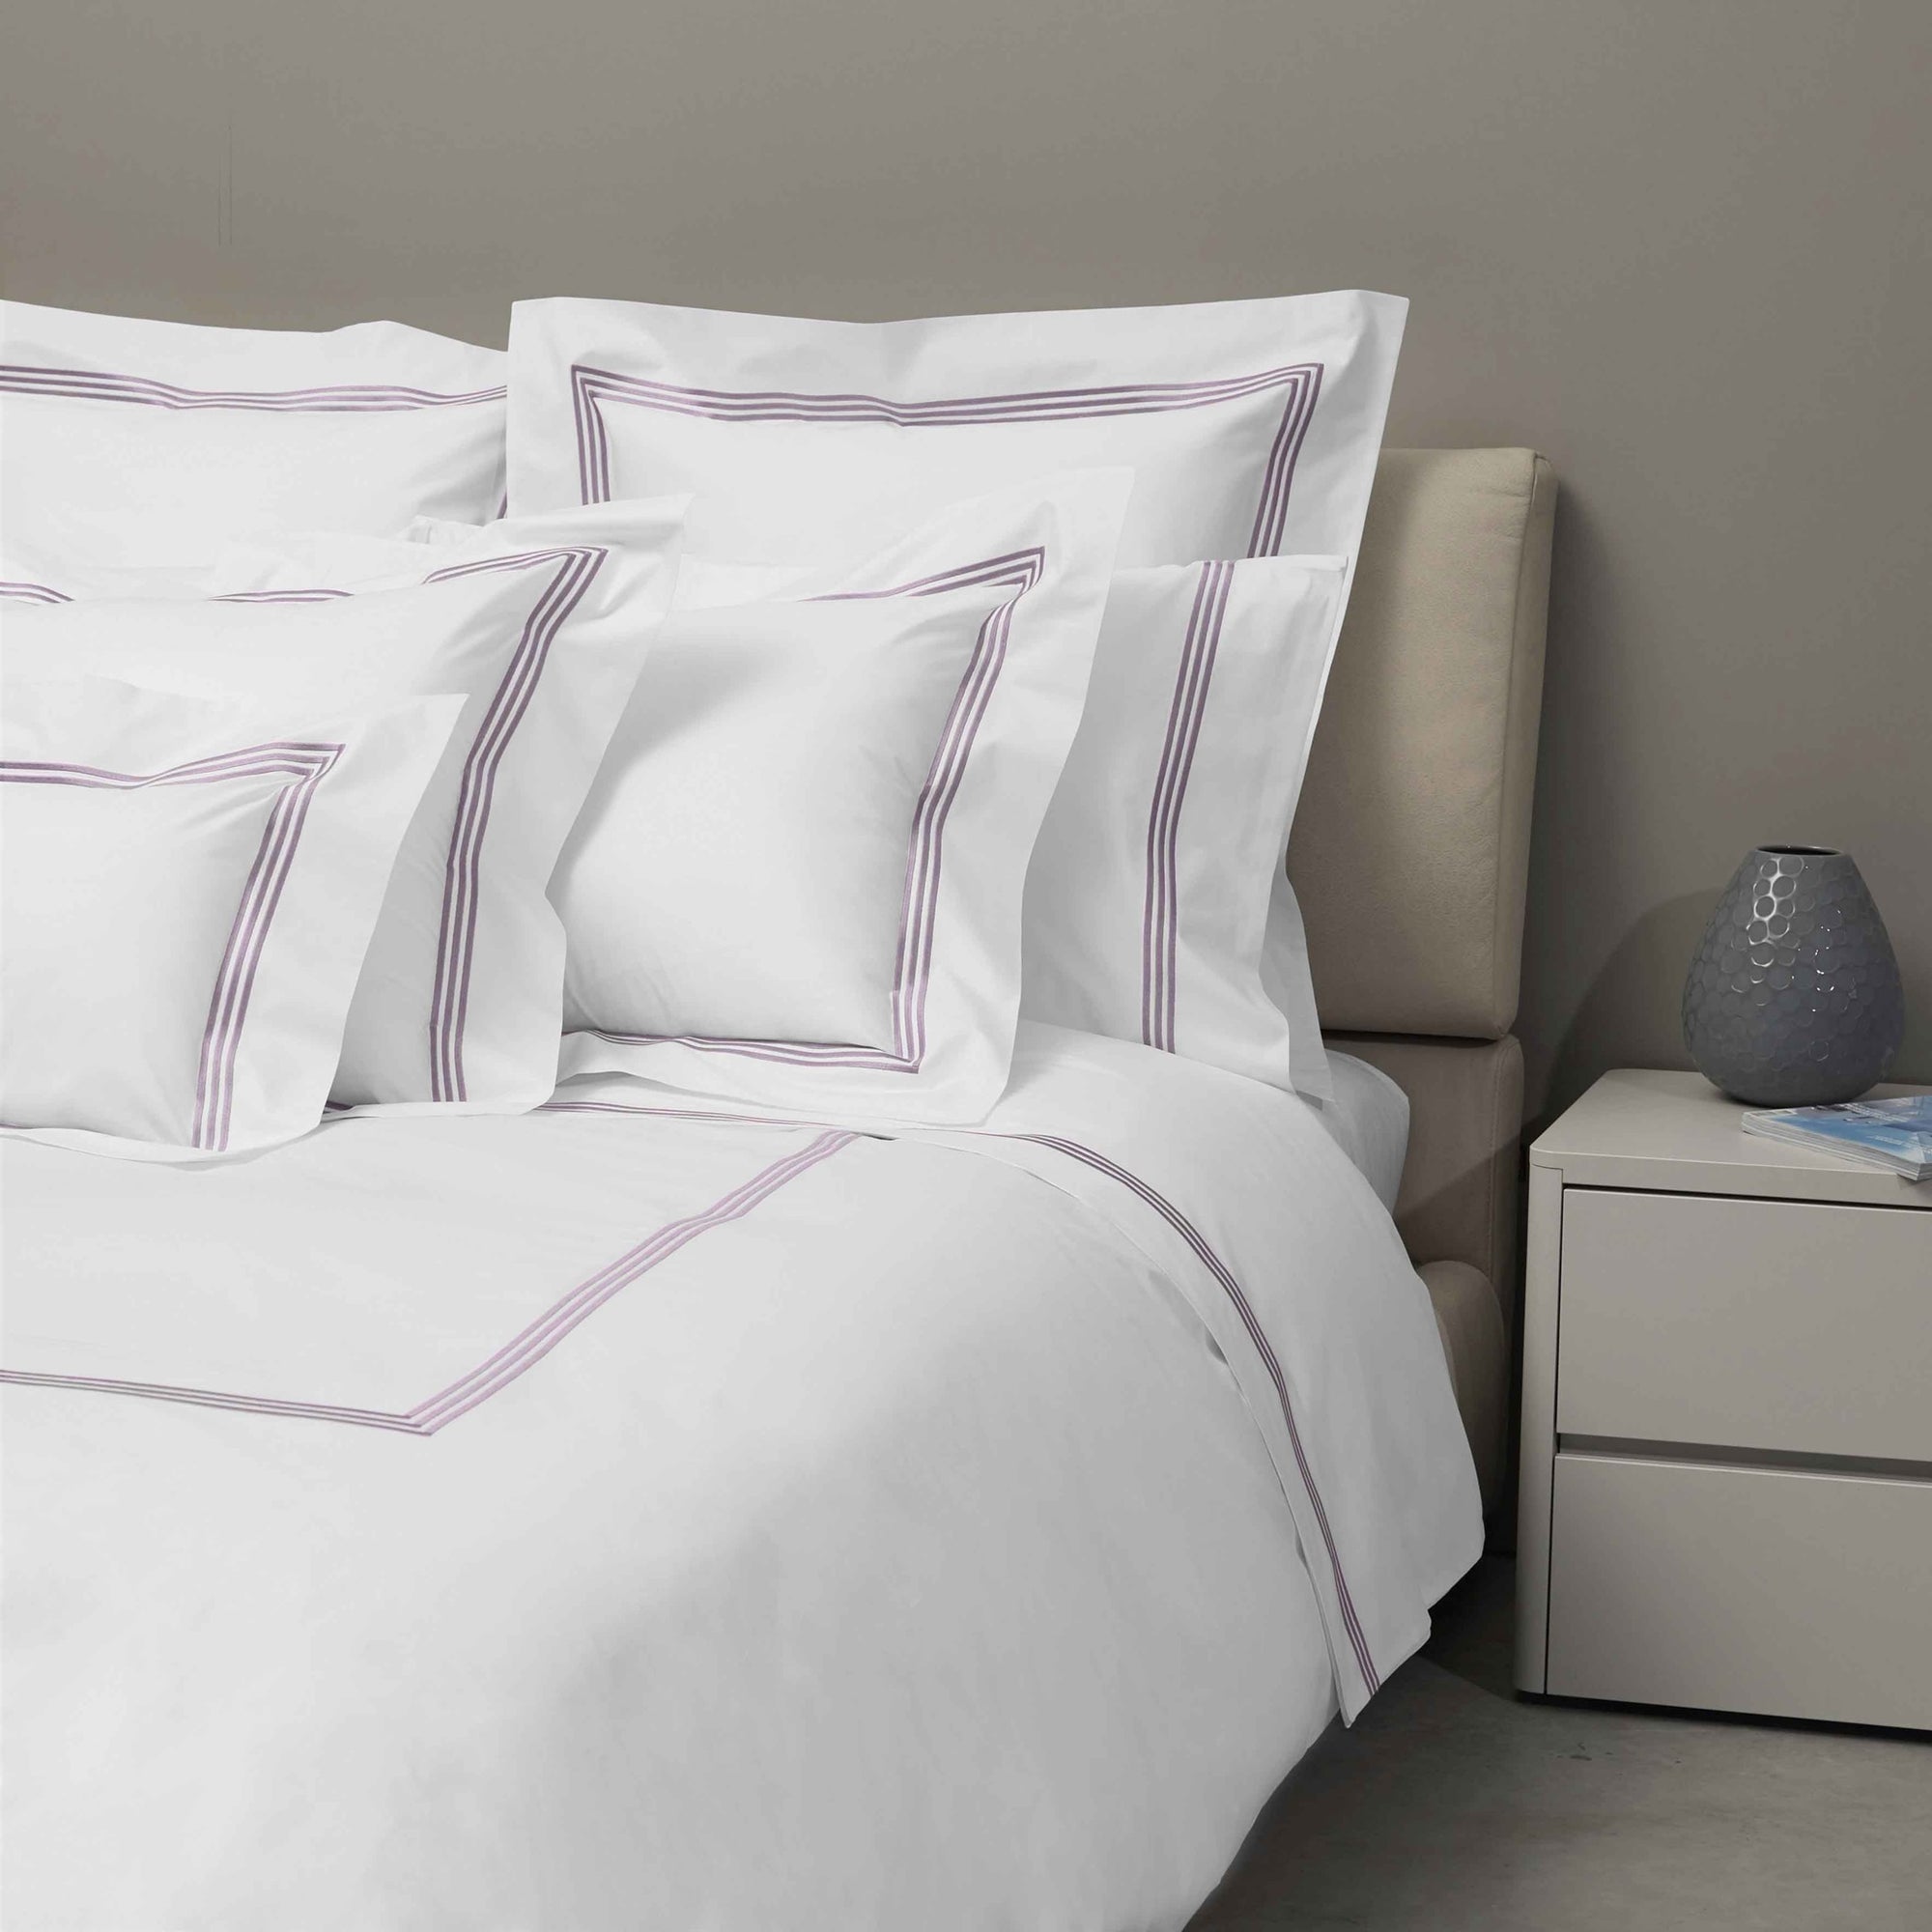 Bed Dressed in Signoria Platinum Percale Bedding in White/Thistle Color